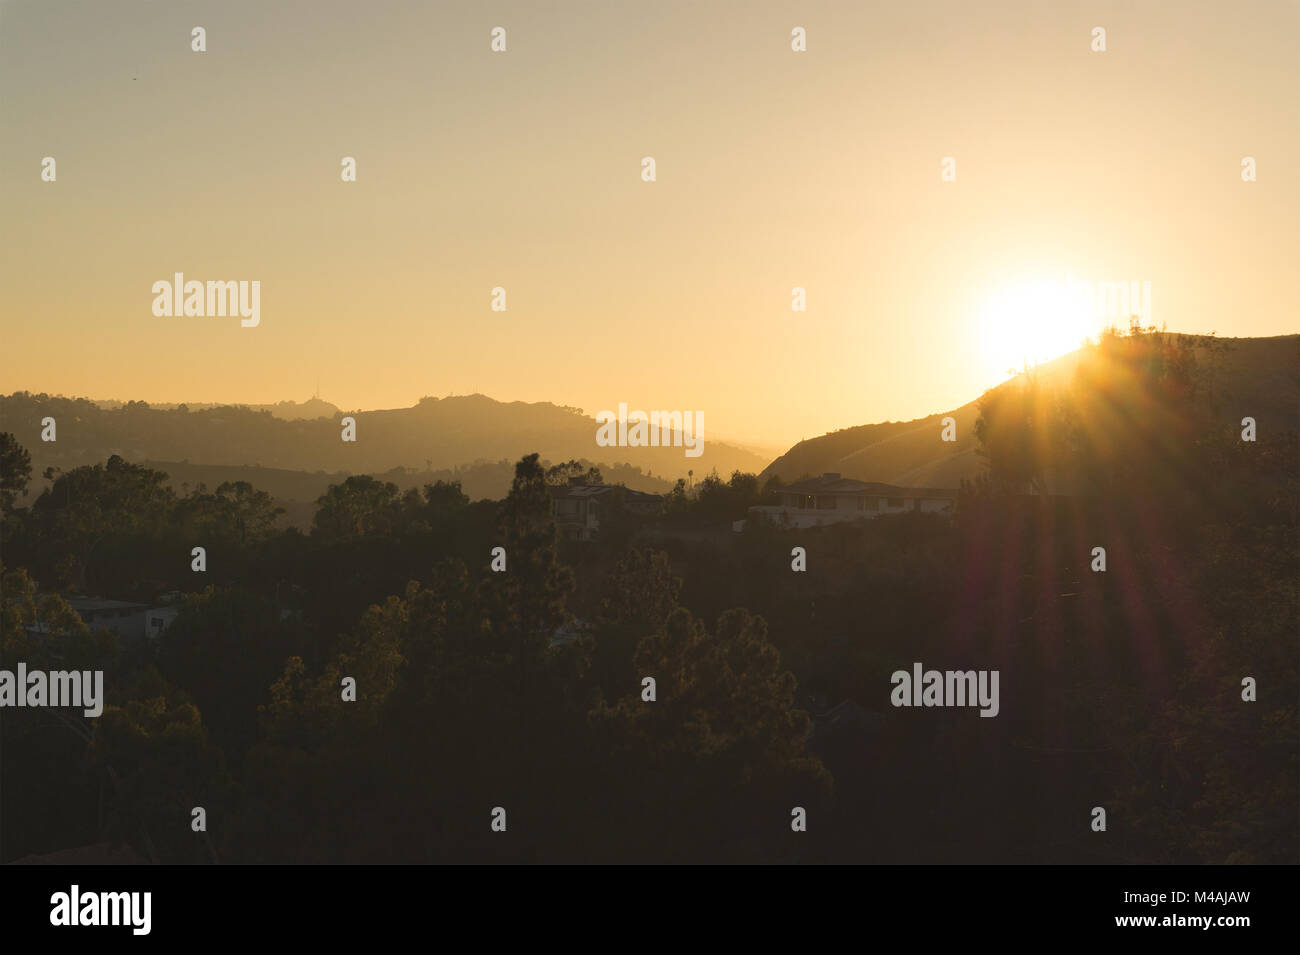 Goldene Stunde Sonnenuntergang Landschaft Blick auf die Hügel. Stockfoto